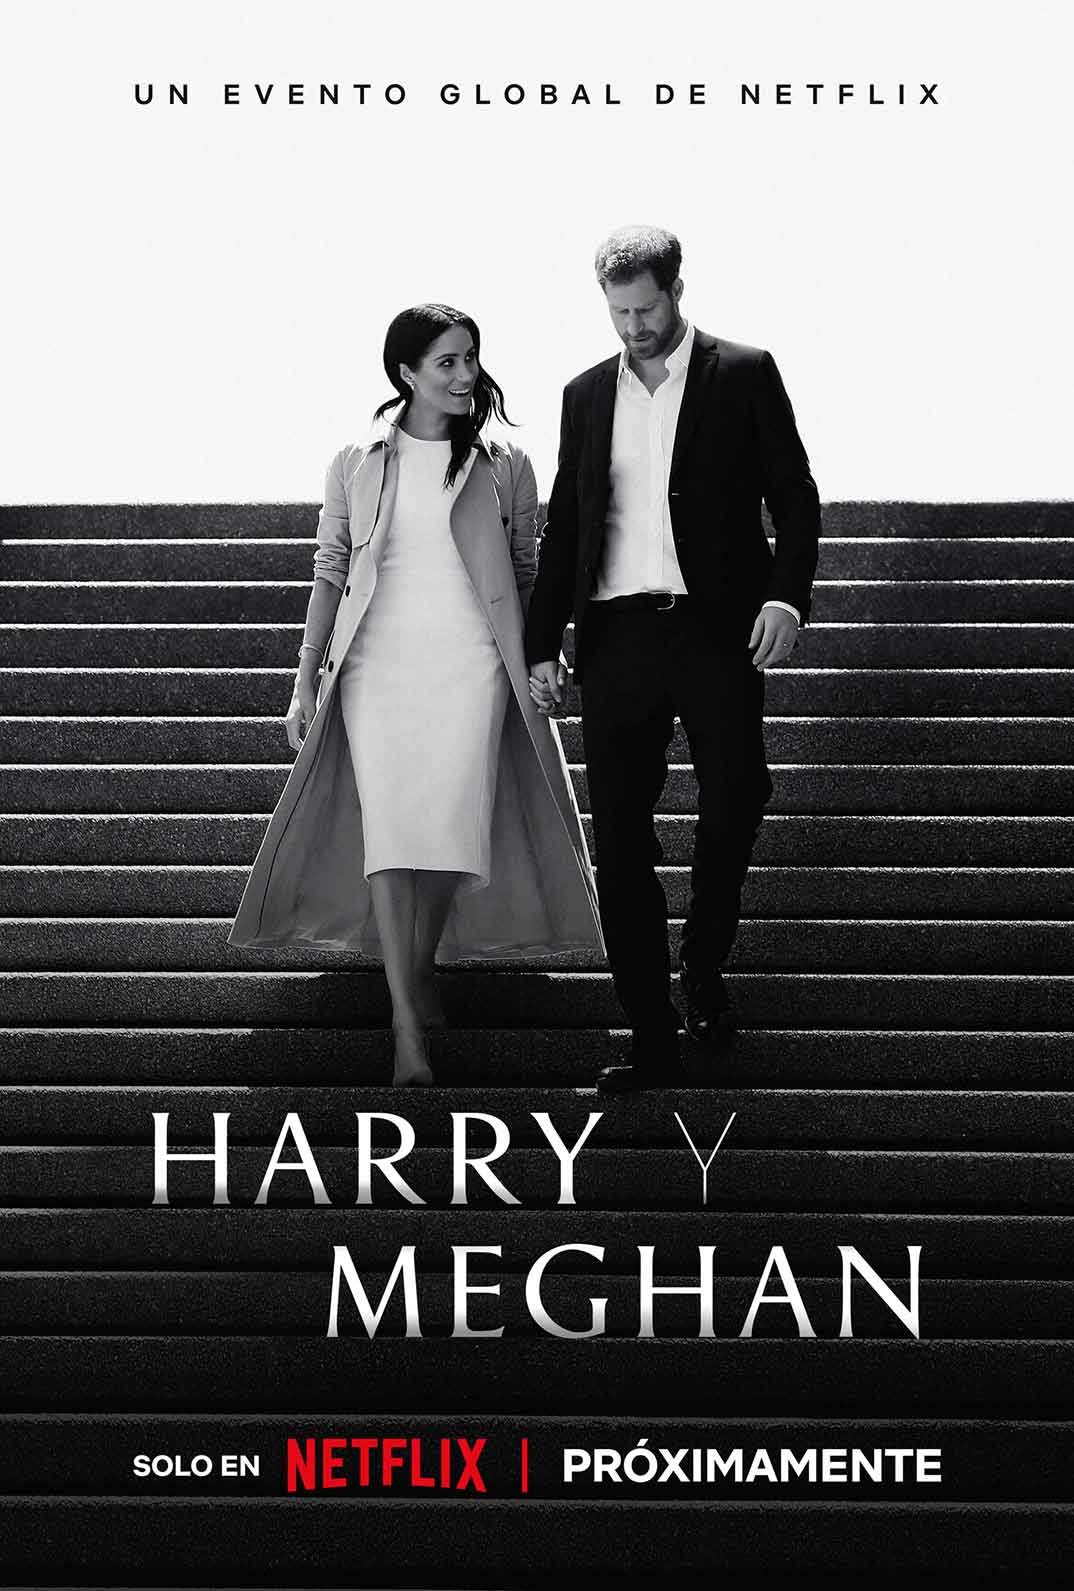 Príncipe Harry y Meghan Markle - Harry y Meghan © Netflix